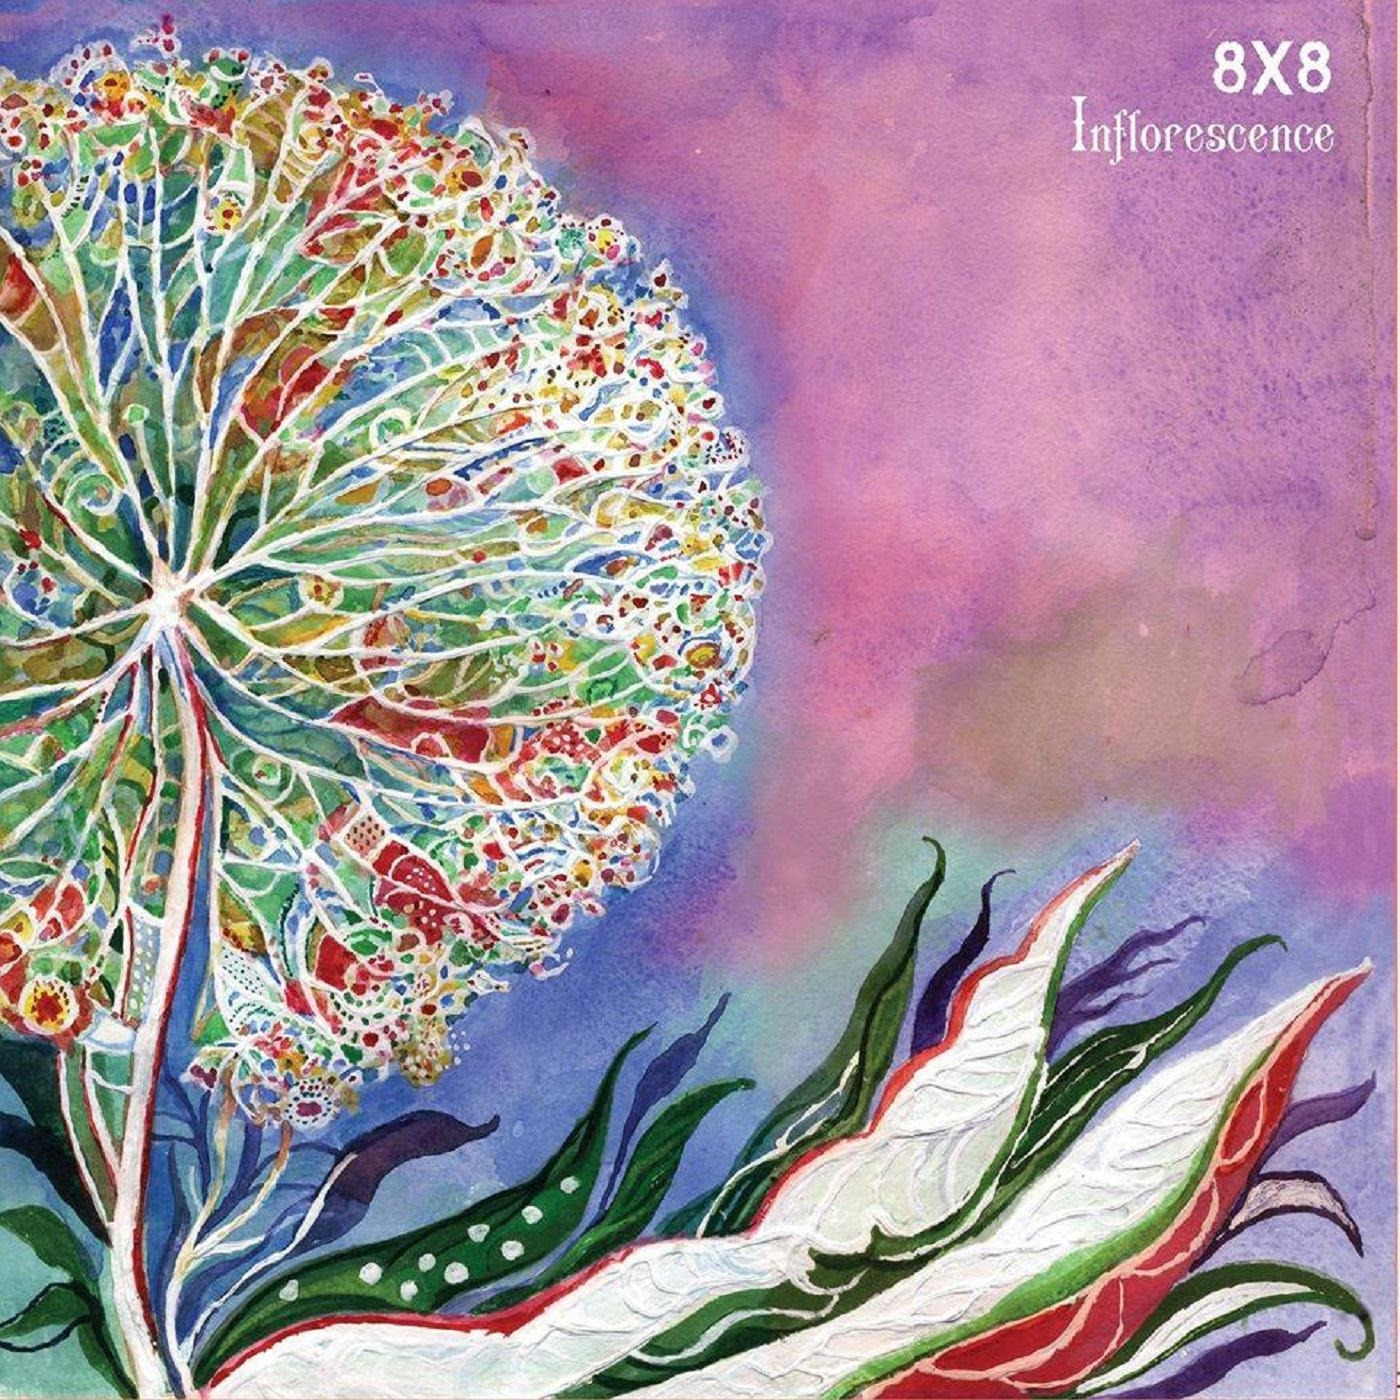 8X8 Inflorescence 33⅓ Vinyl LP Reissue Sugarbush, Mint Import SB030